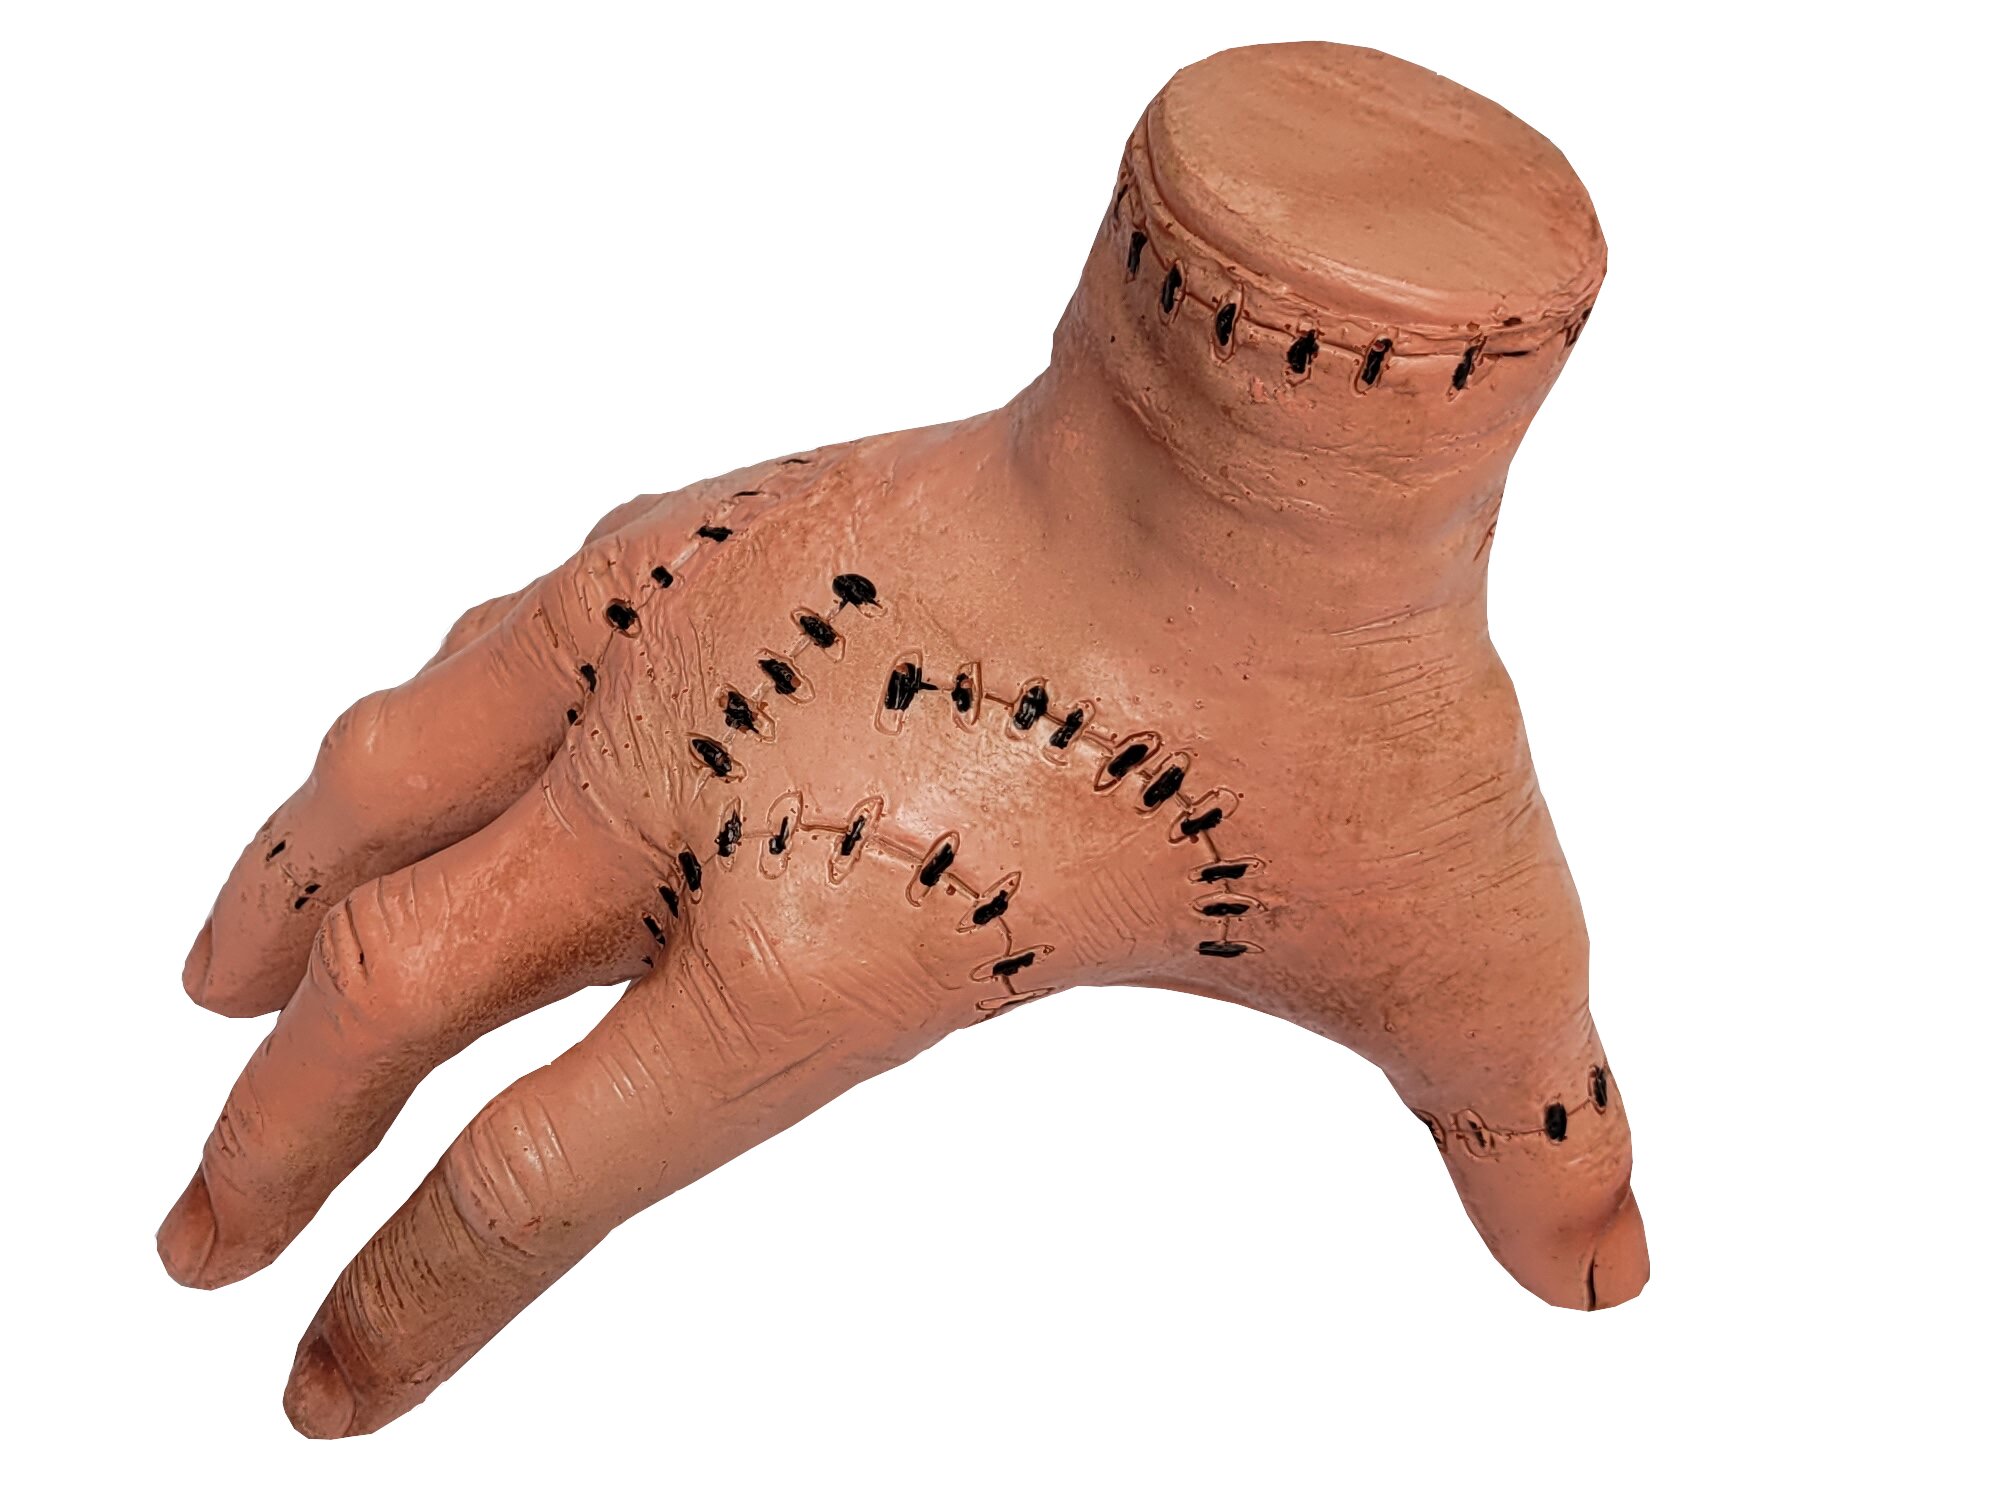 PxP 6290955 - Kalte Hand, Flexibel, Witziges Accessoire bzw. Dekoartikel, luftgefüllte Hand aus formstabilem Kunststoff